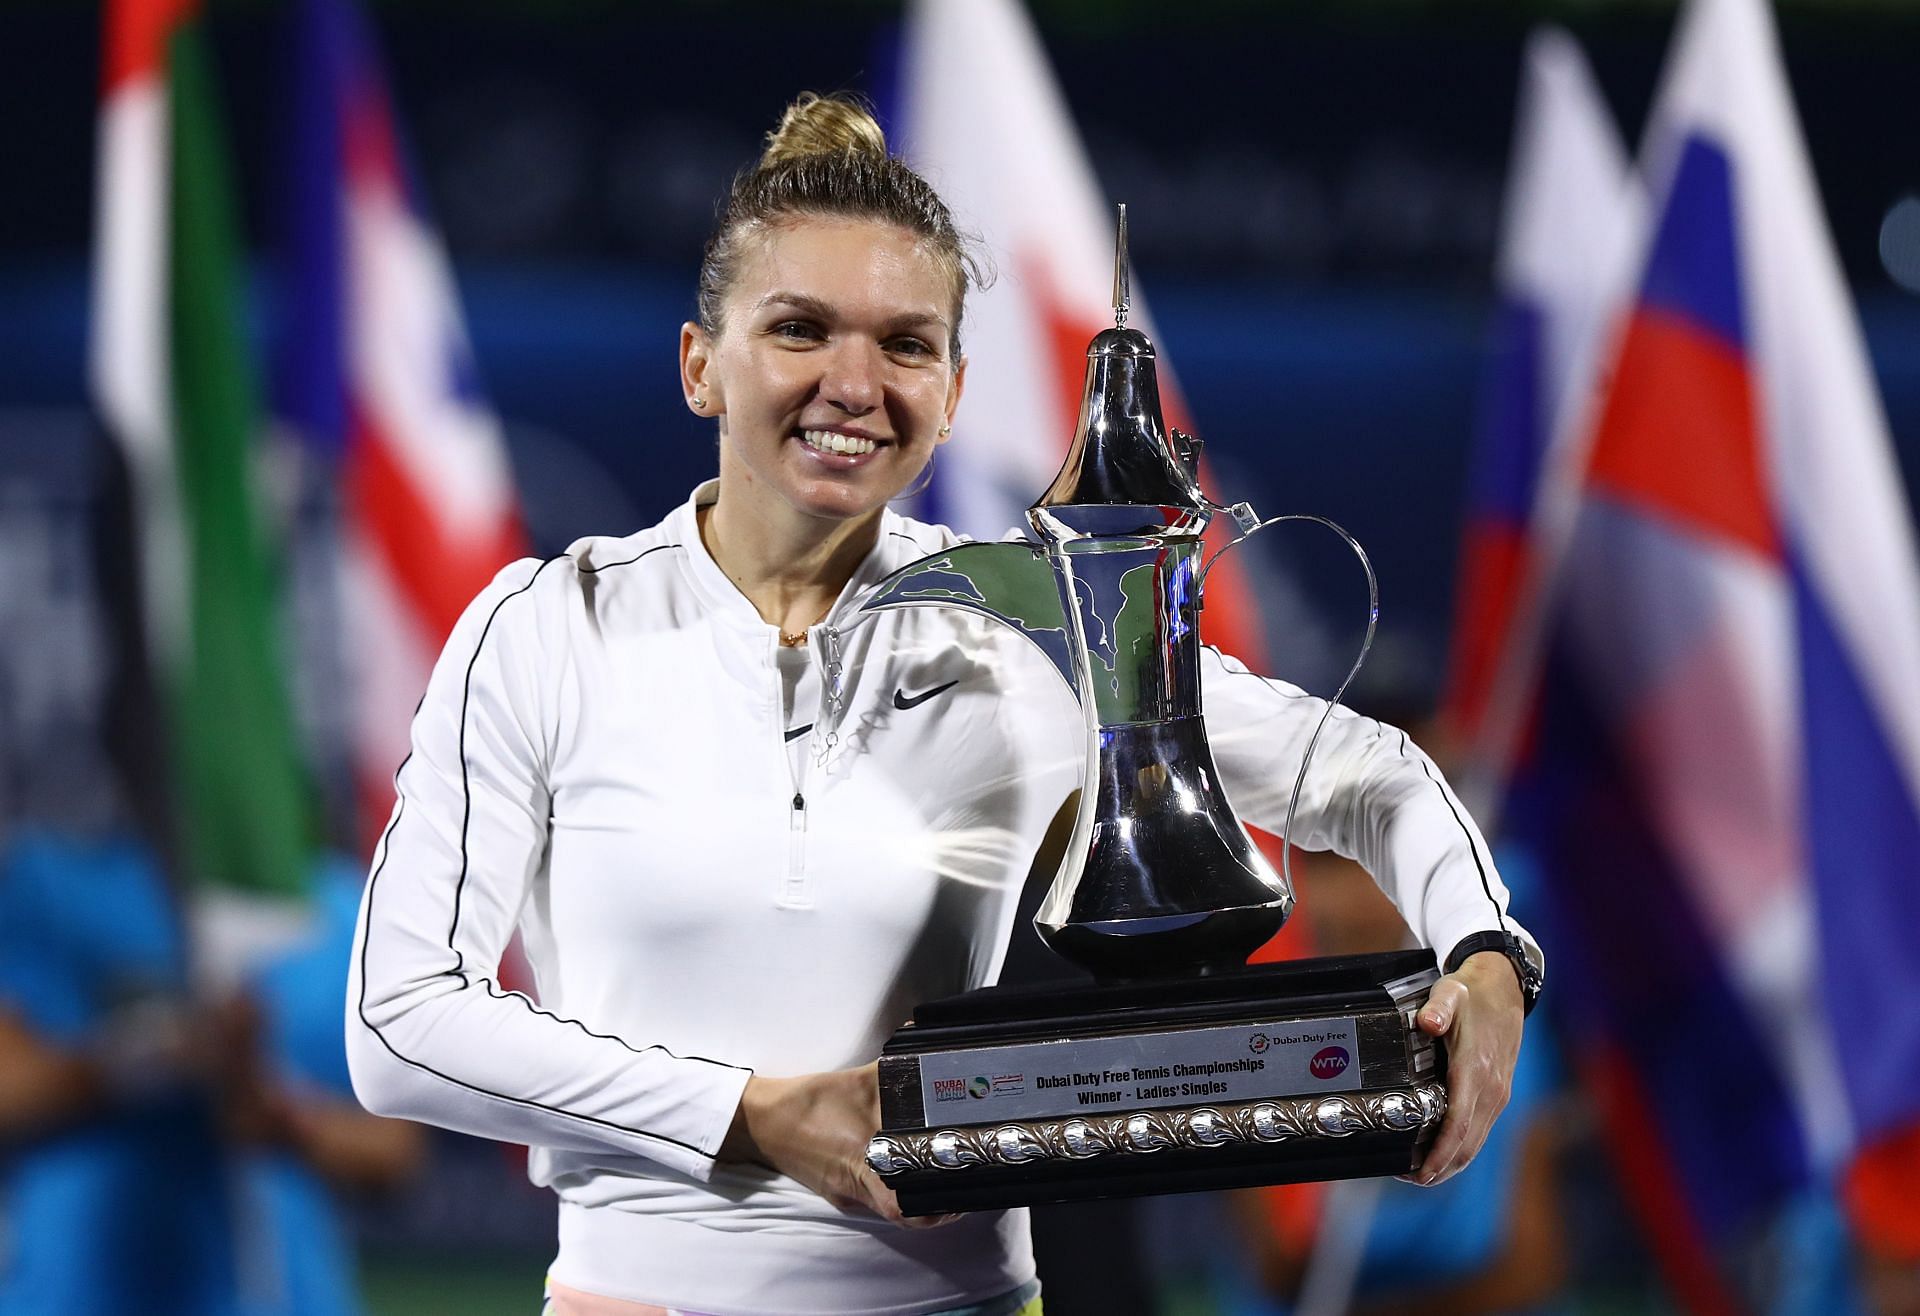 Simona Halep won the 2020 Dubai Duty Free Tennis Championships